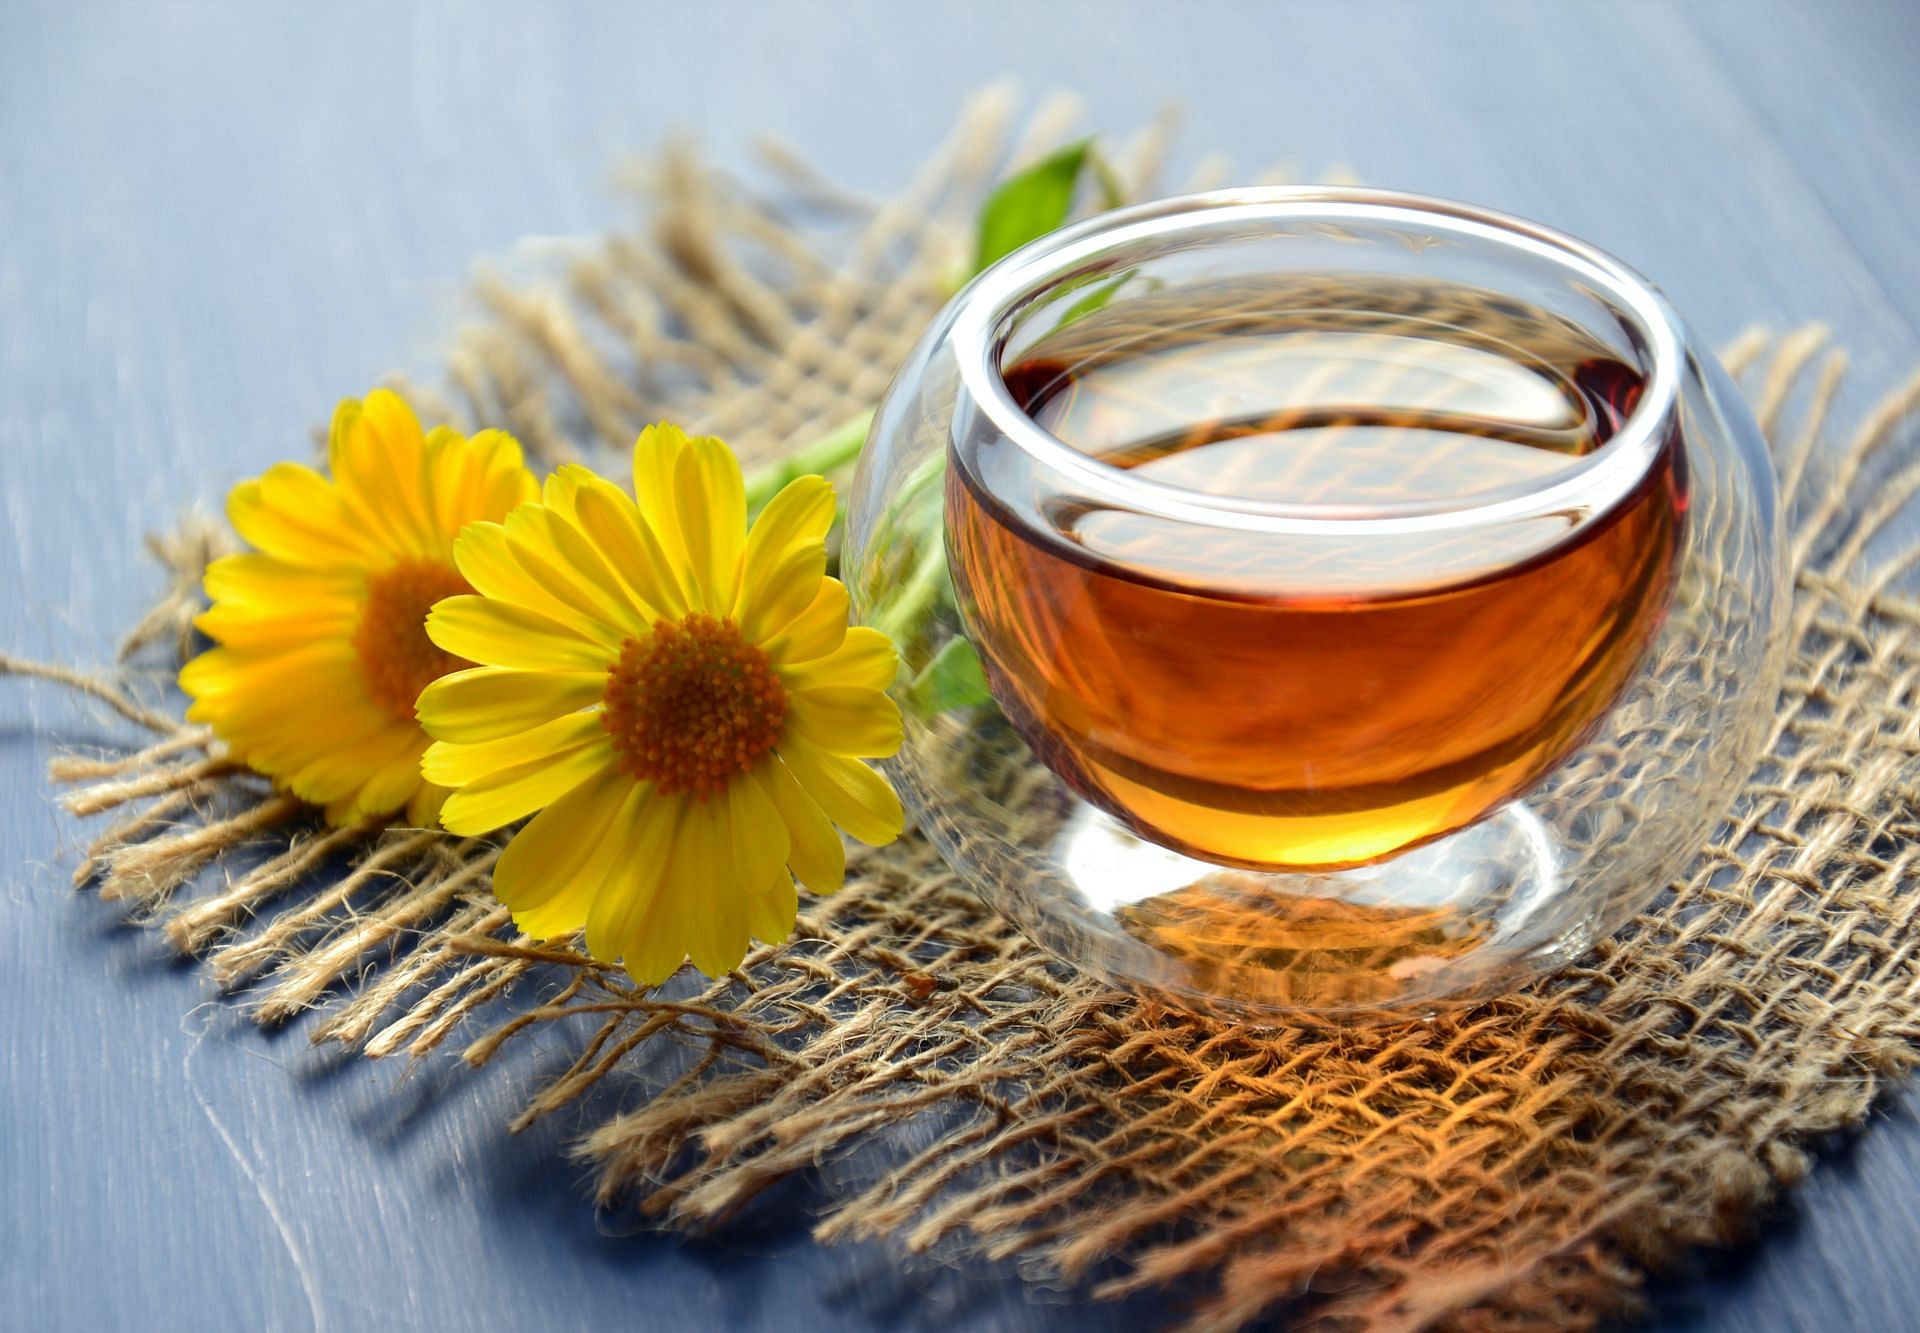 yellow tea benefits (image sourced via Pexels / Photo by mareefe)